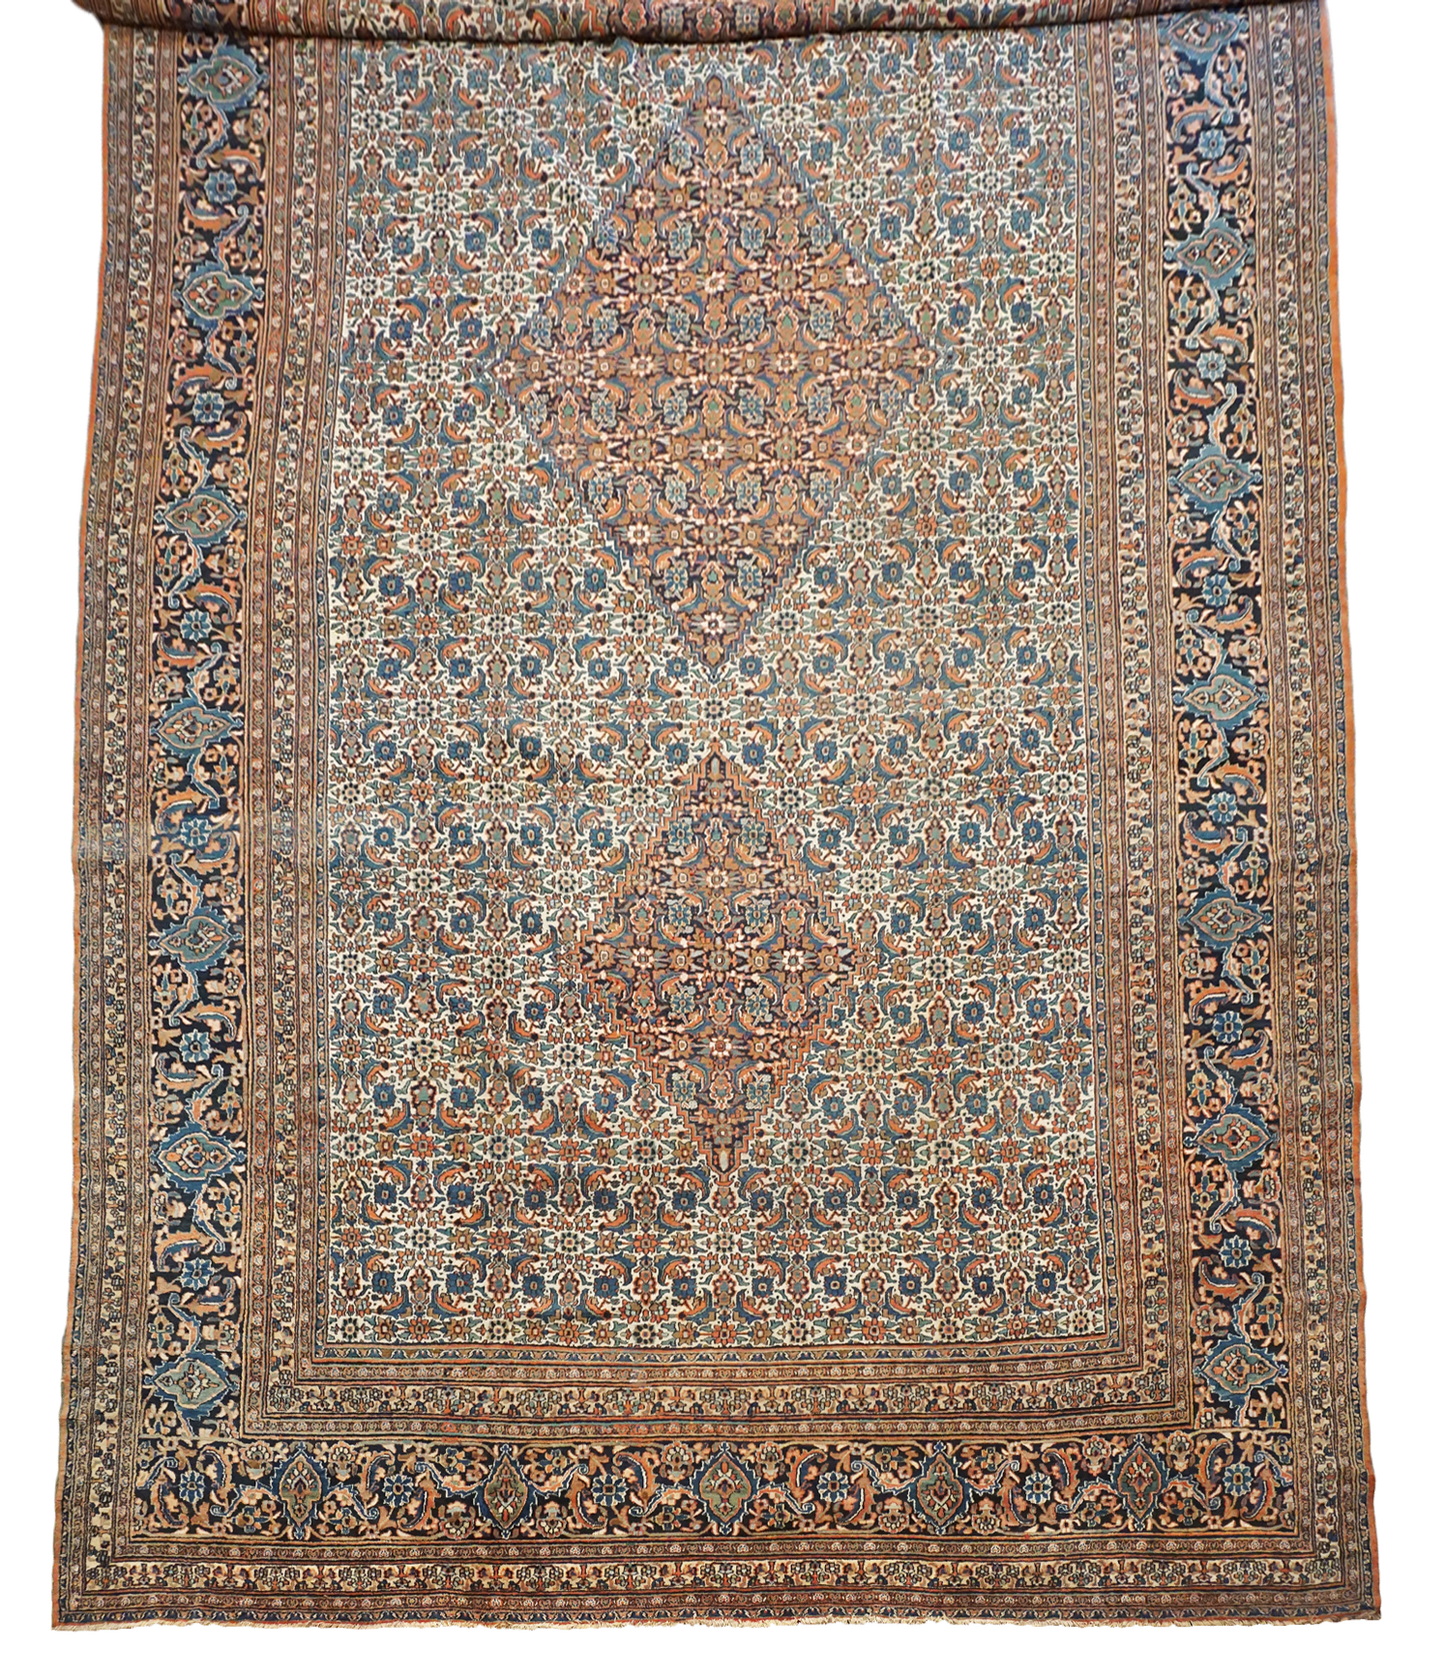 13X24 Antique Dorukhsh, circa 1900